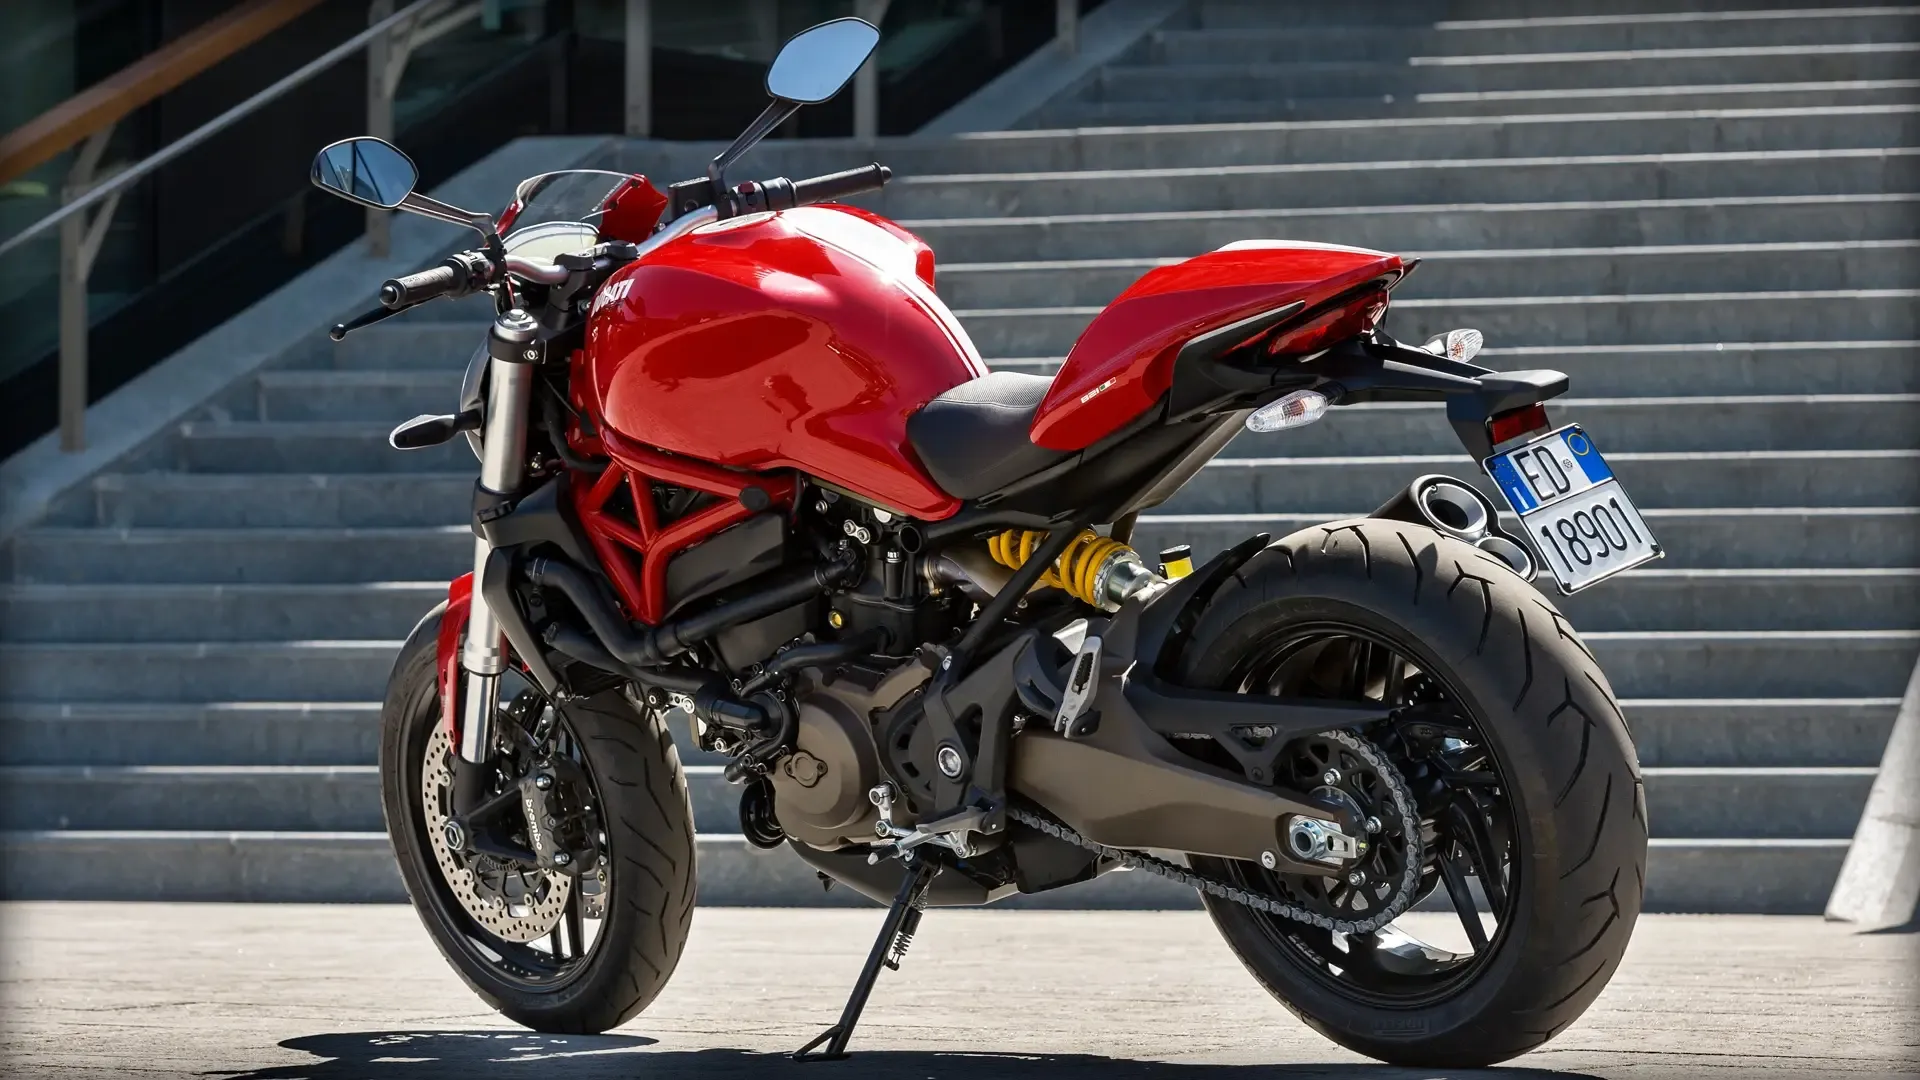 Б/у мотоцикл ducati monster 821 2015, красный пробег 18900 с пробегом